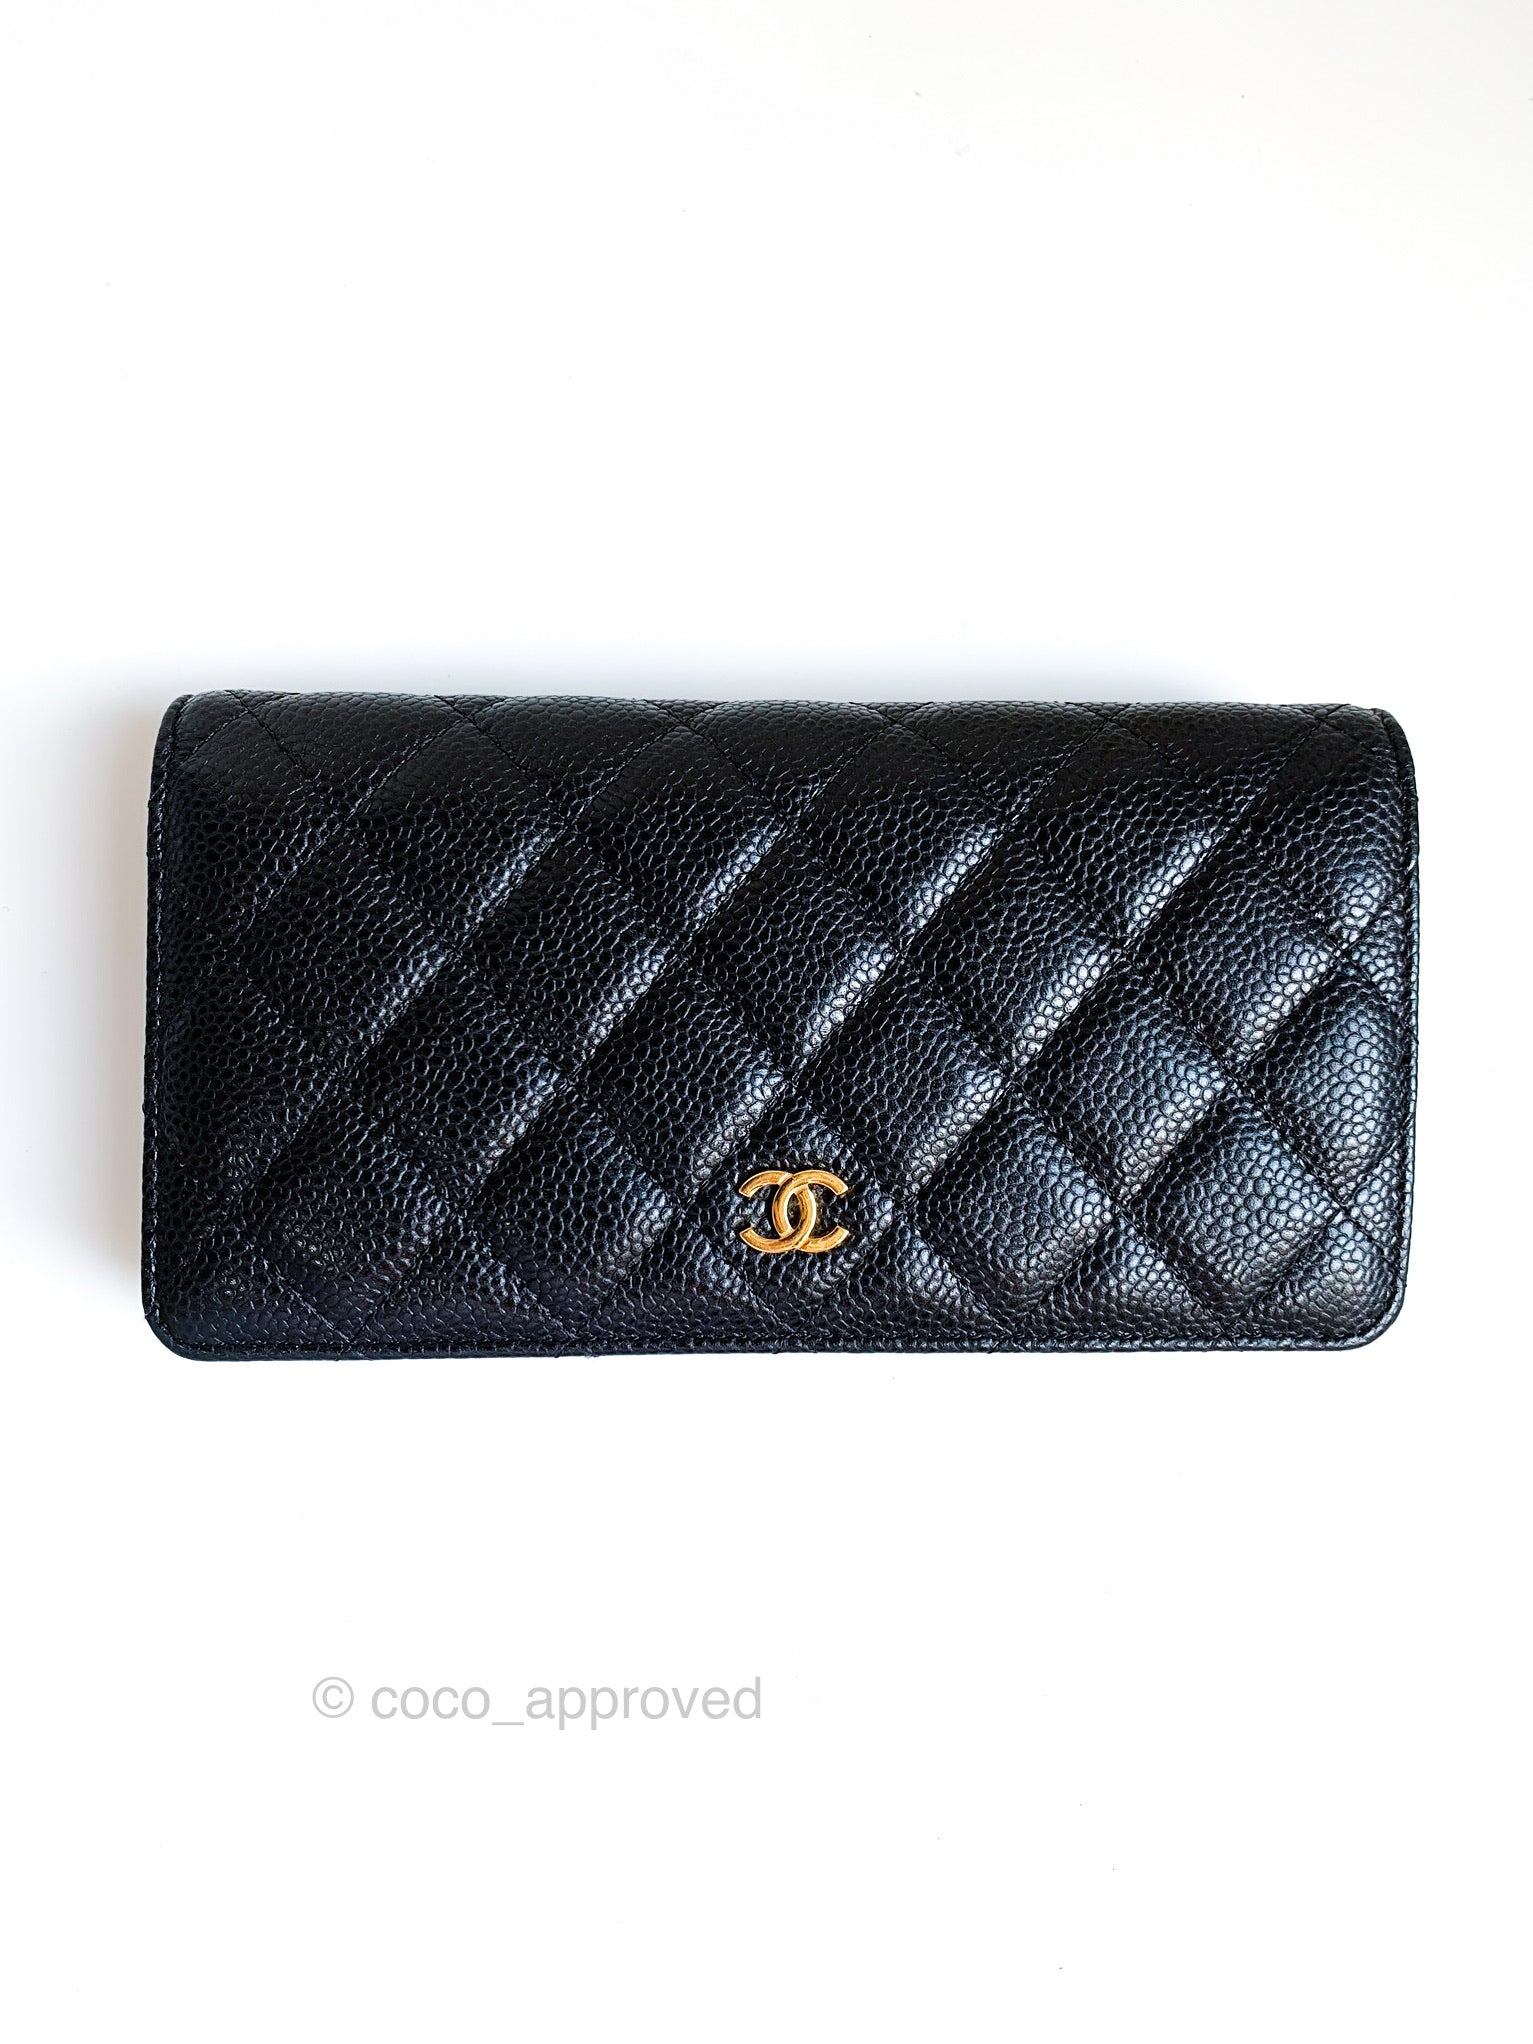 Chanel Card Holder Wallet Black Caviar Crystal and Light Gold Hardware